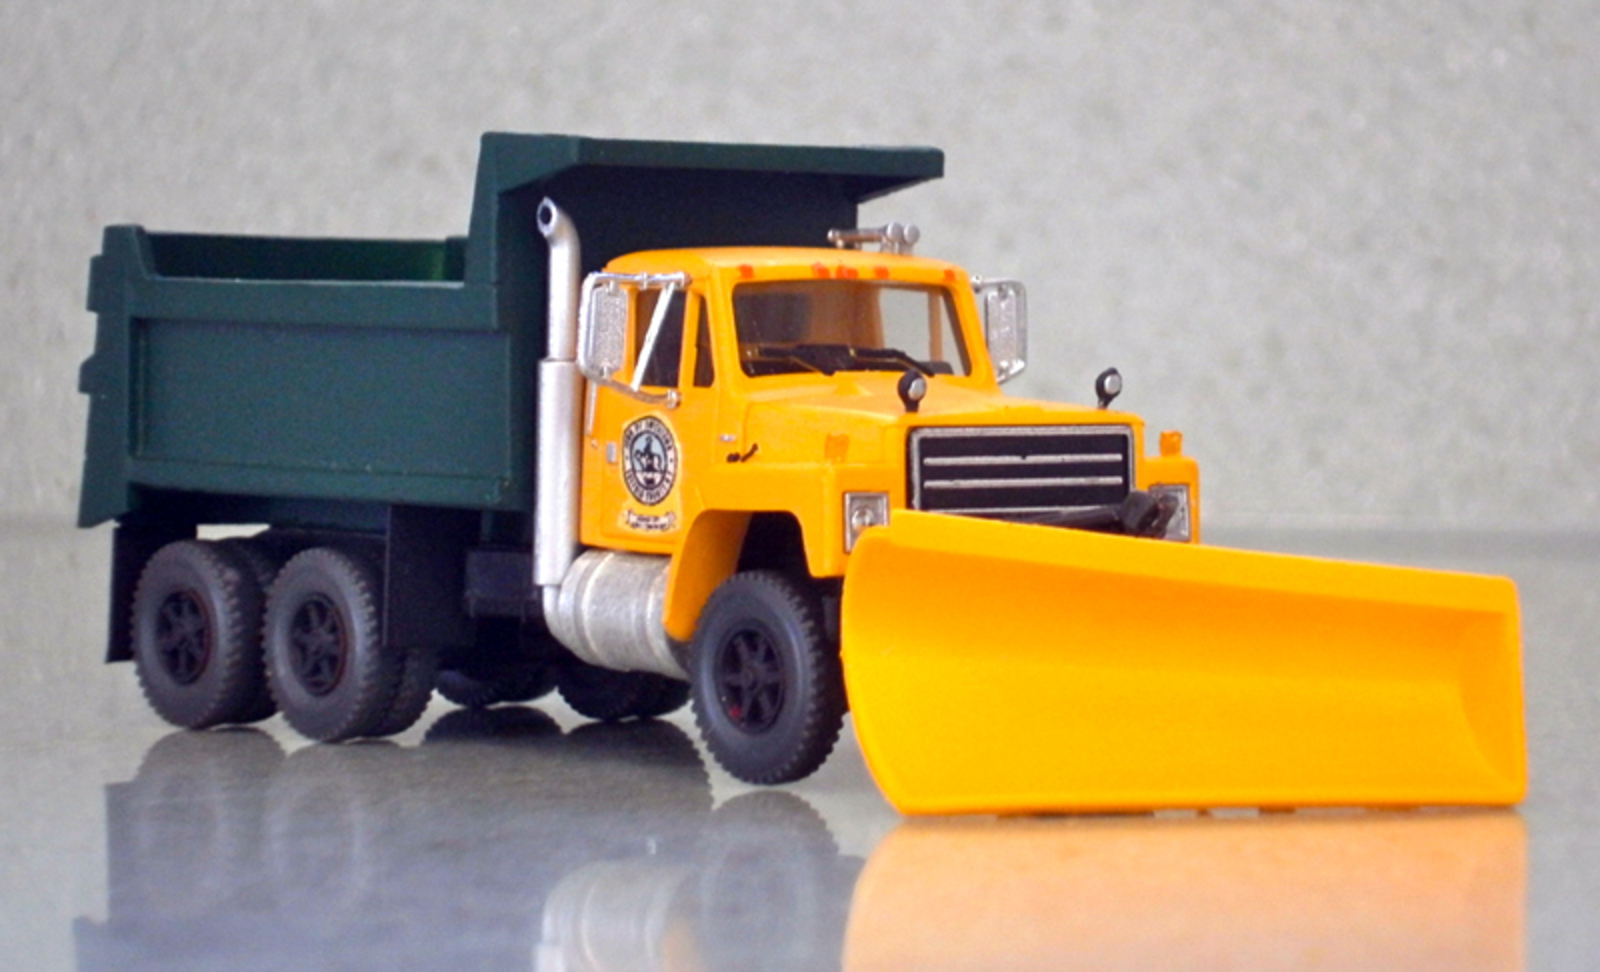 International SF-2500 Dump Truck With Snow Plow